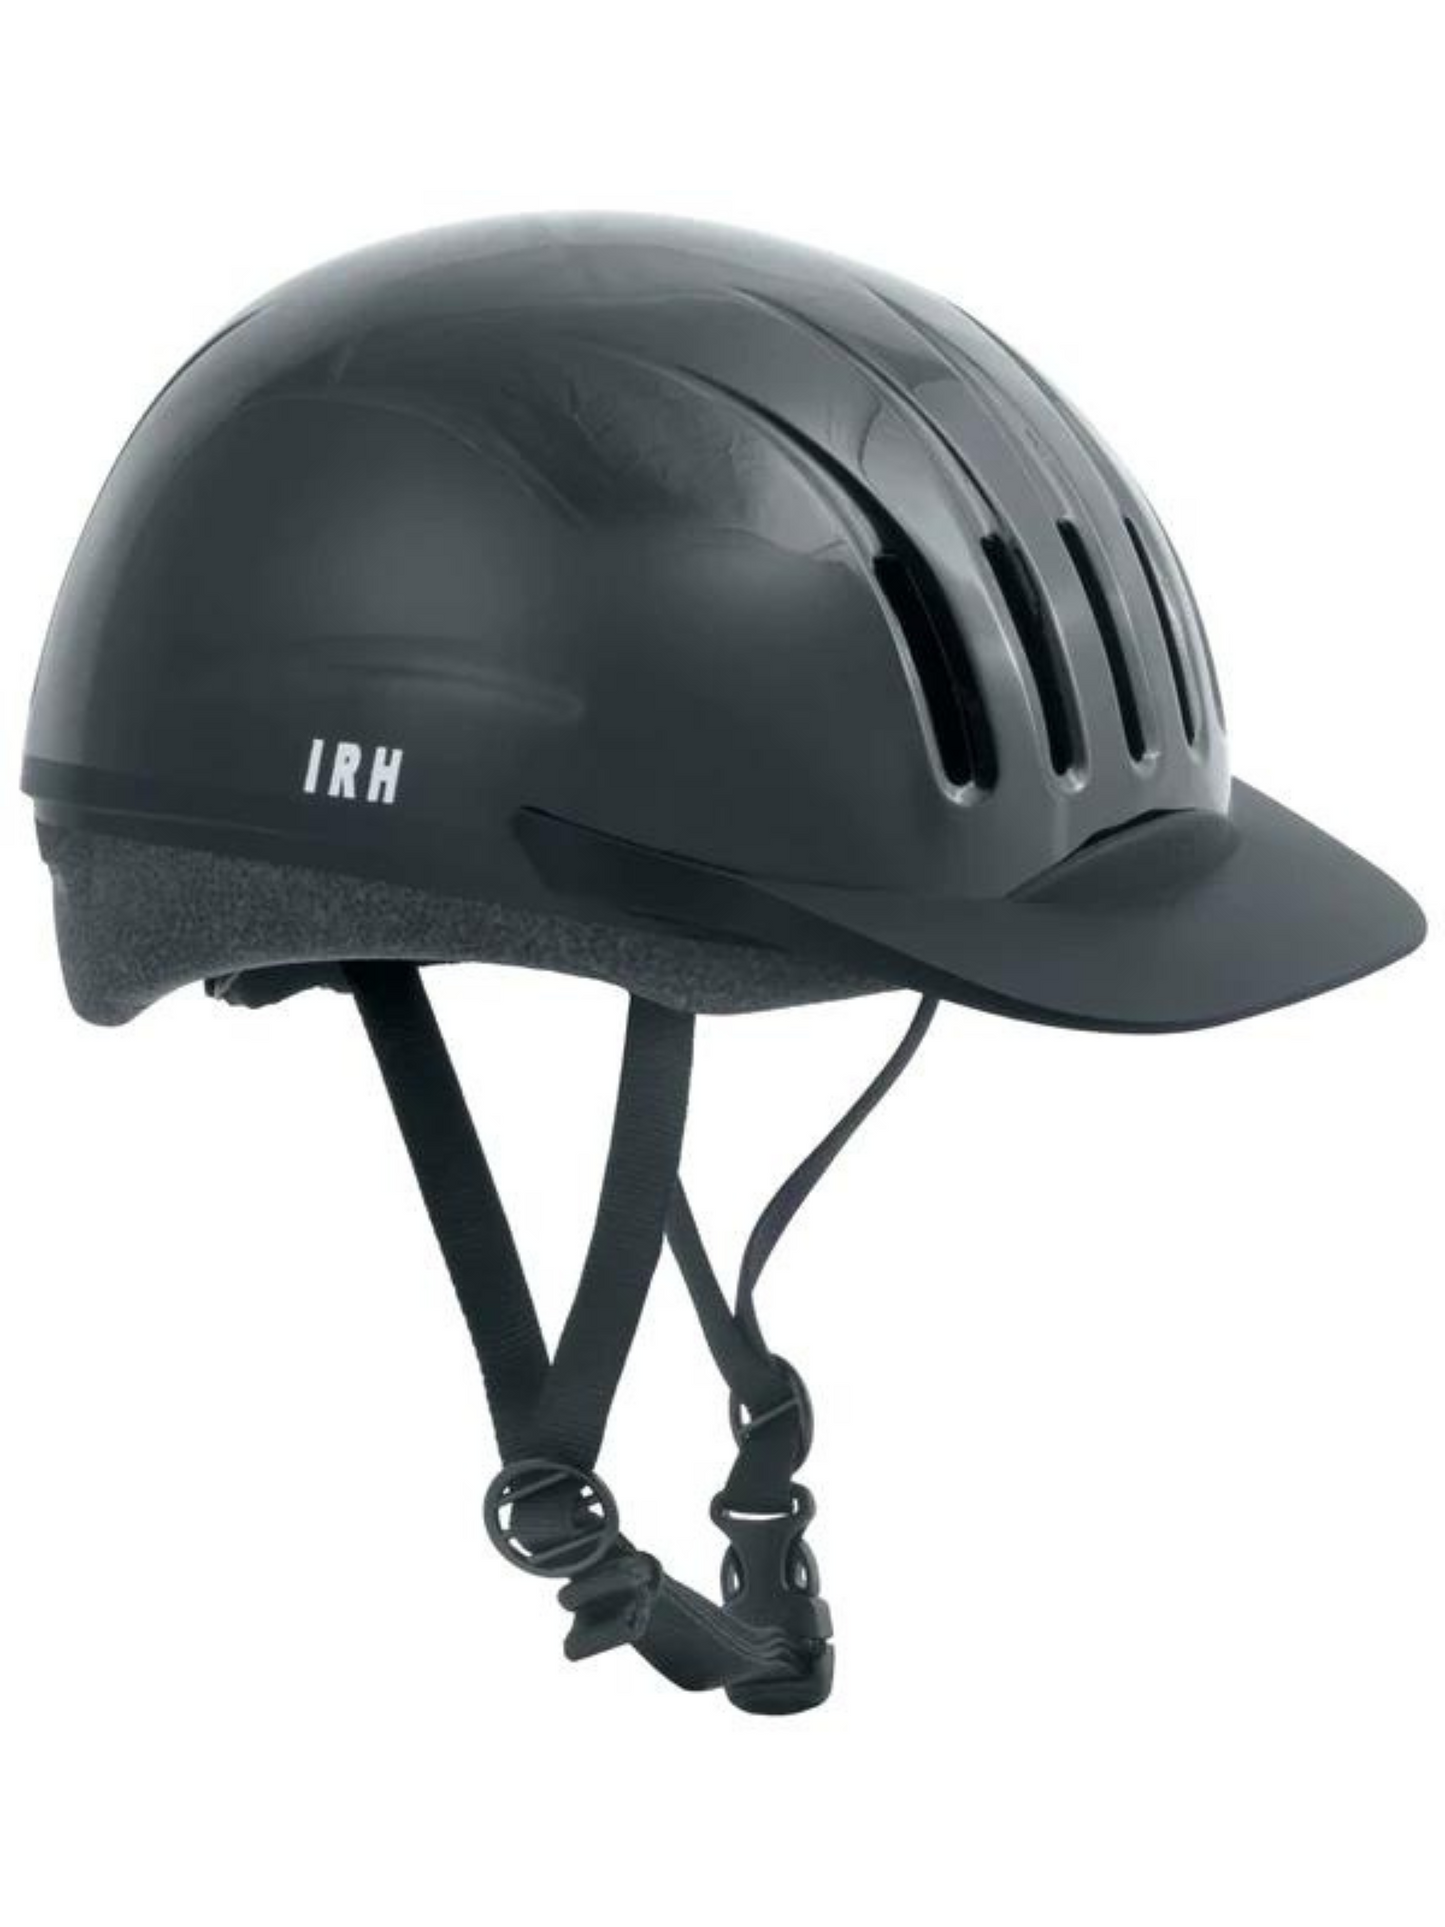 IRH EQUI-LITE Camp/Trail/School Helmet (Matte Black)